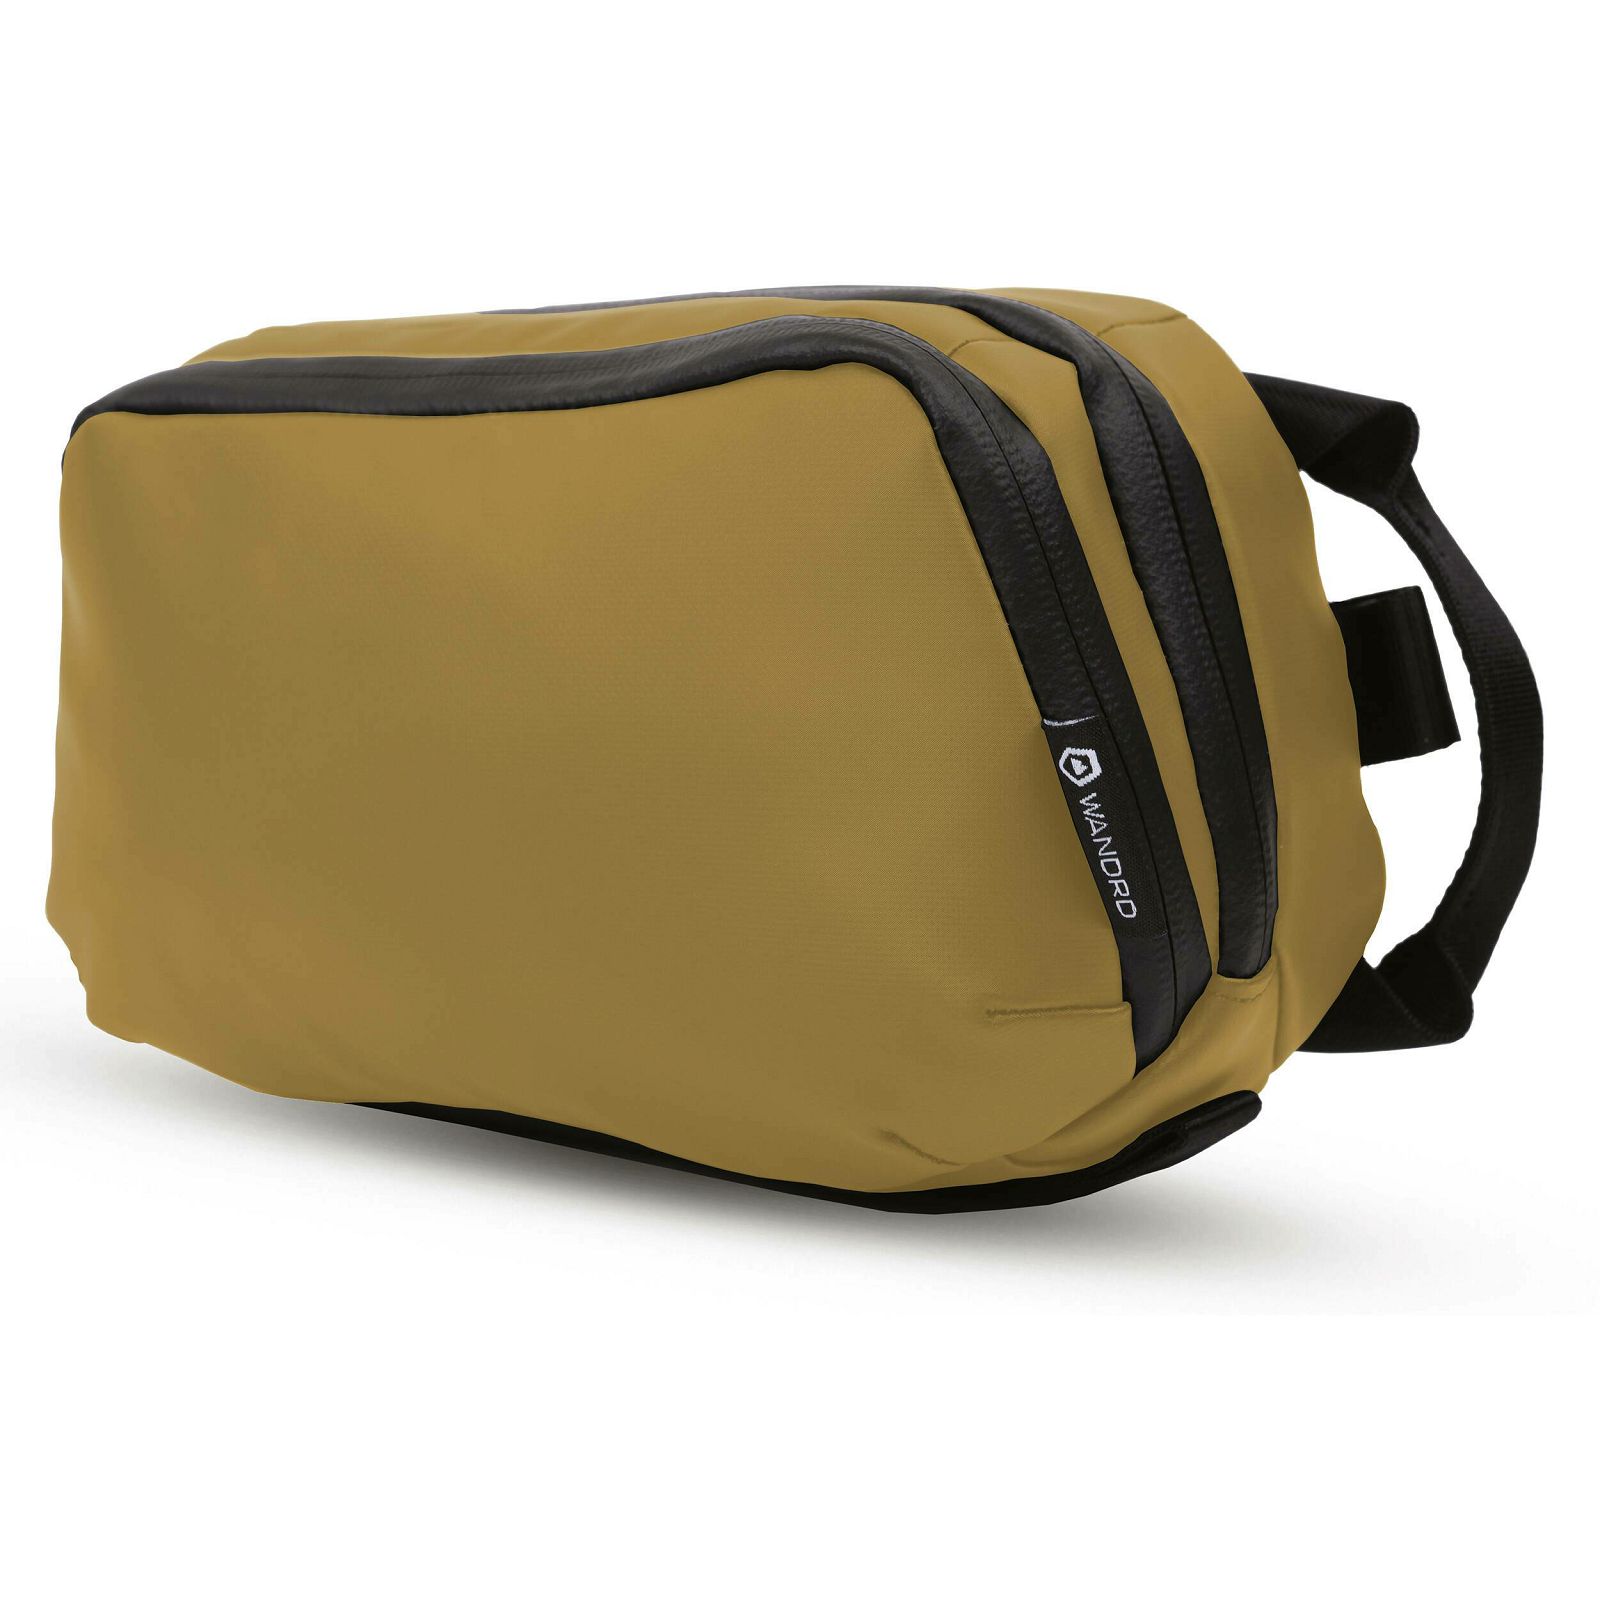 Wandrd Tech Bag Large Dallol Yellow (TP-LG-DY-2)